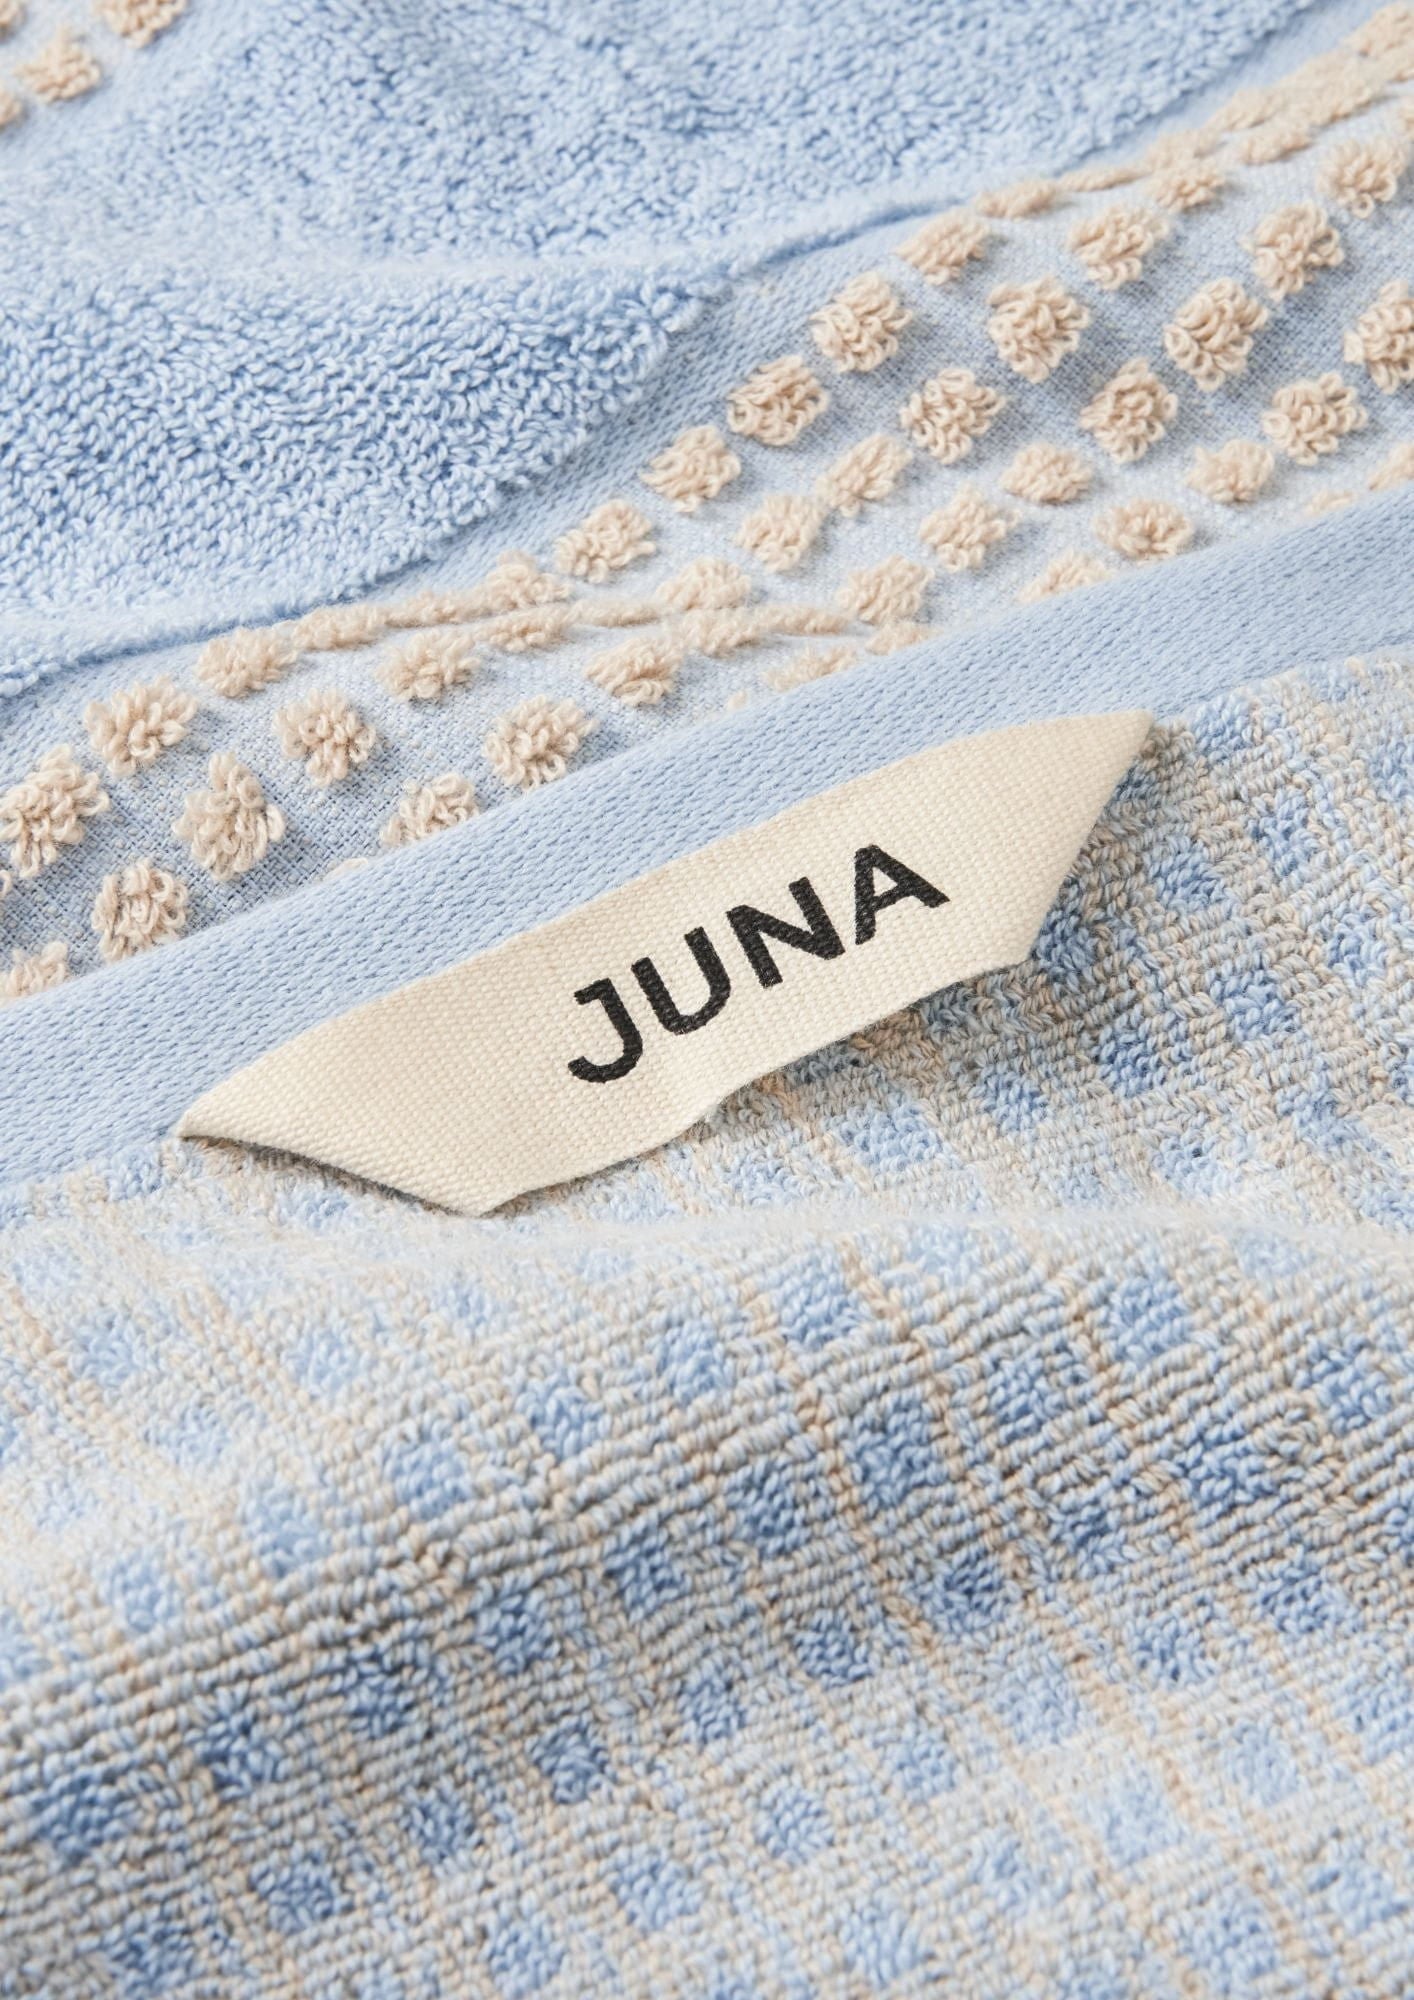 JUNA Kontrollera handduken 50x100 cm, ljusblå/sand